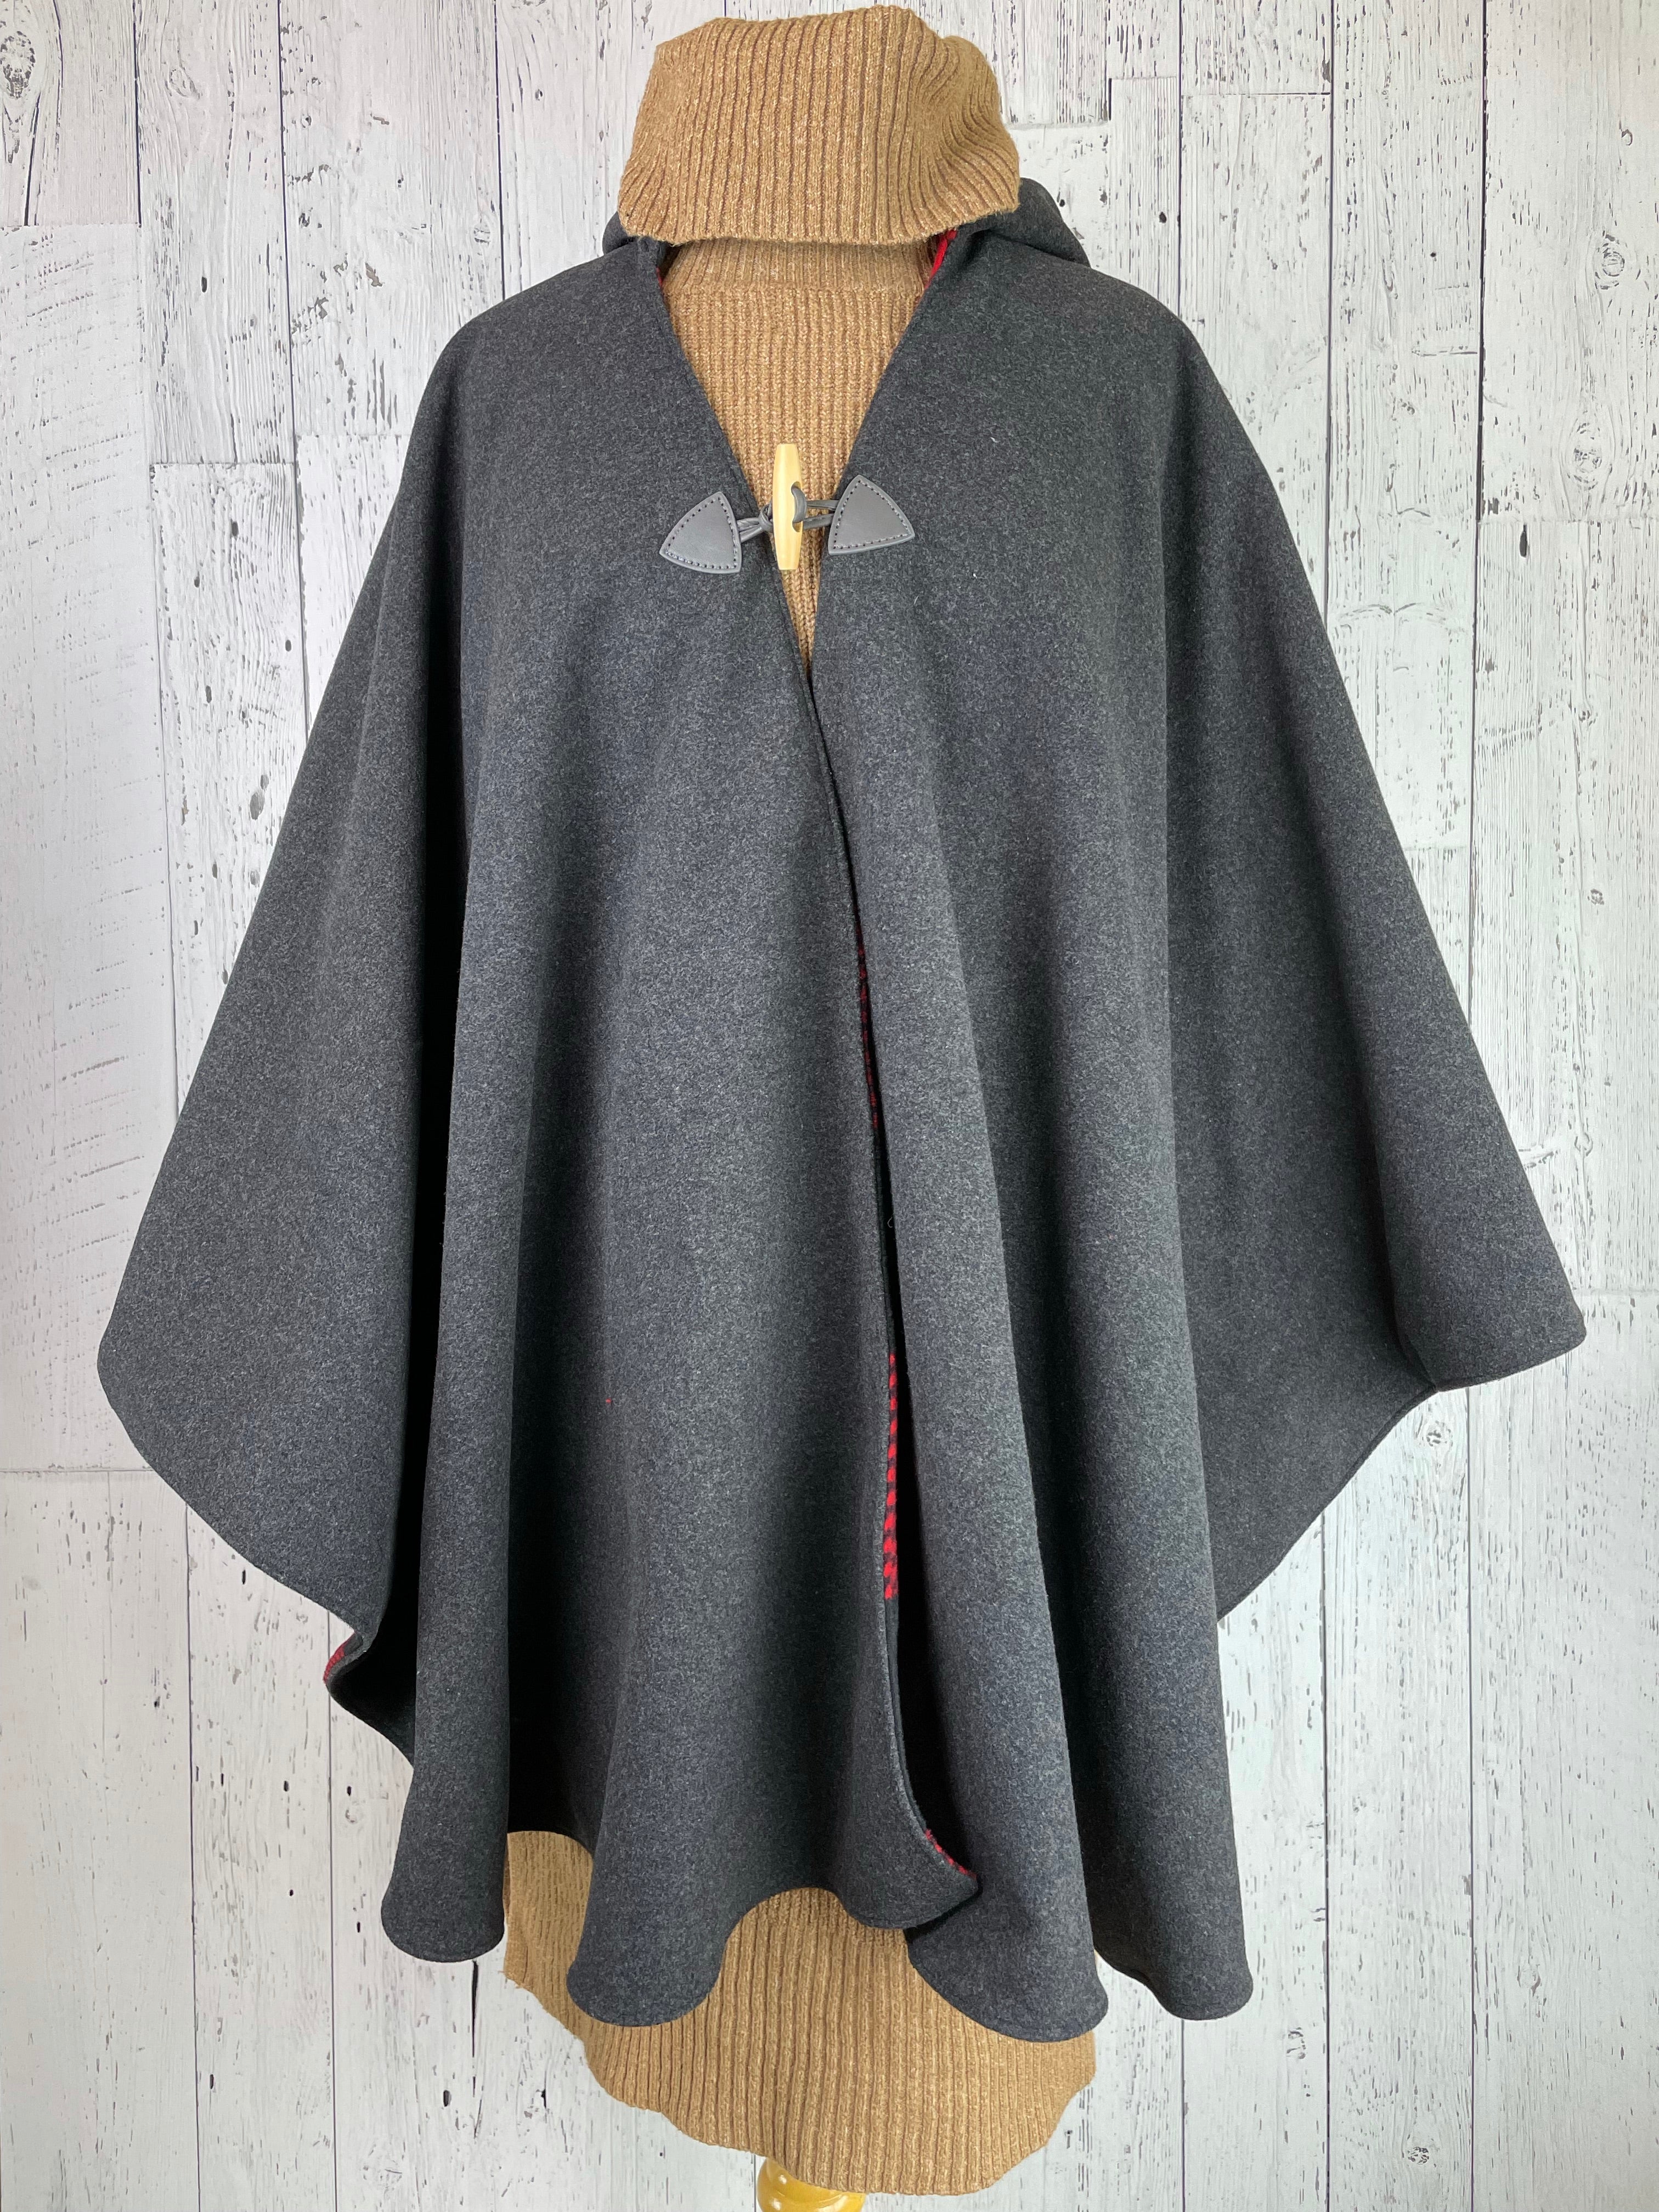 Hooded Wool & Fleece Lined Poncho Cape